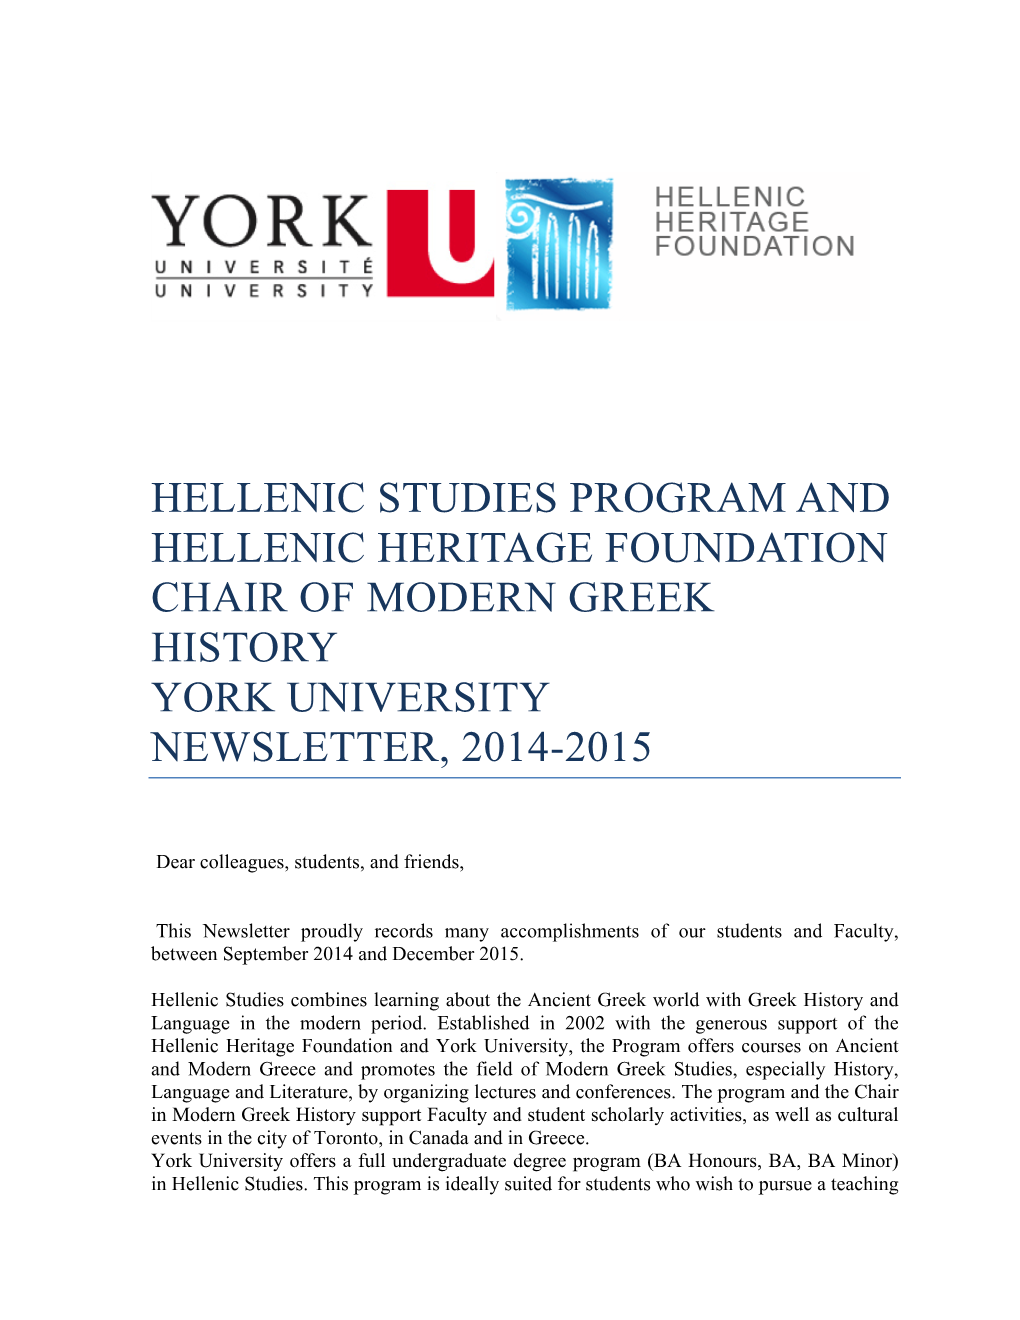 Hellenic Studies Program and Hellenic Heritage Foundation Chair of Modern Greek History York University Newsletter, 2014-2015